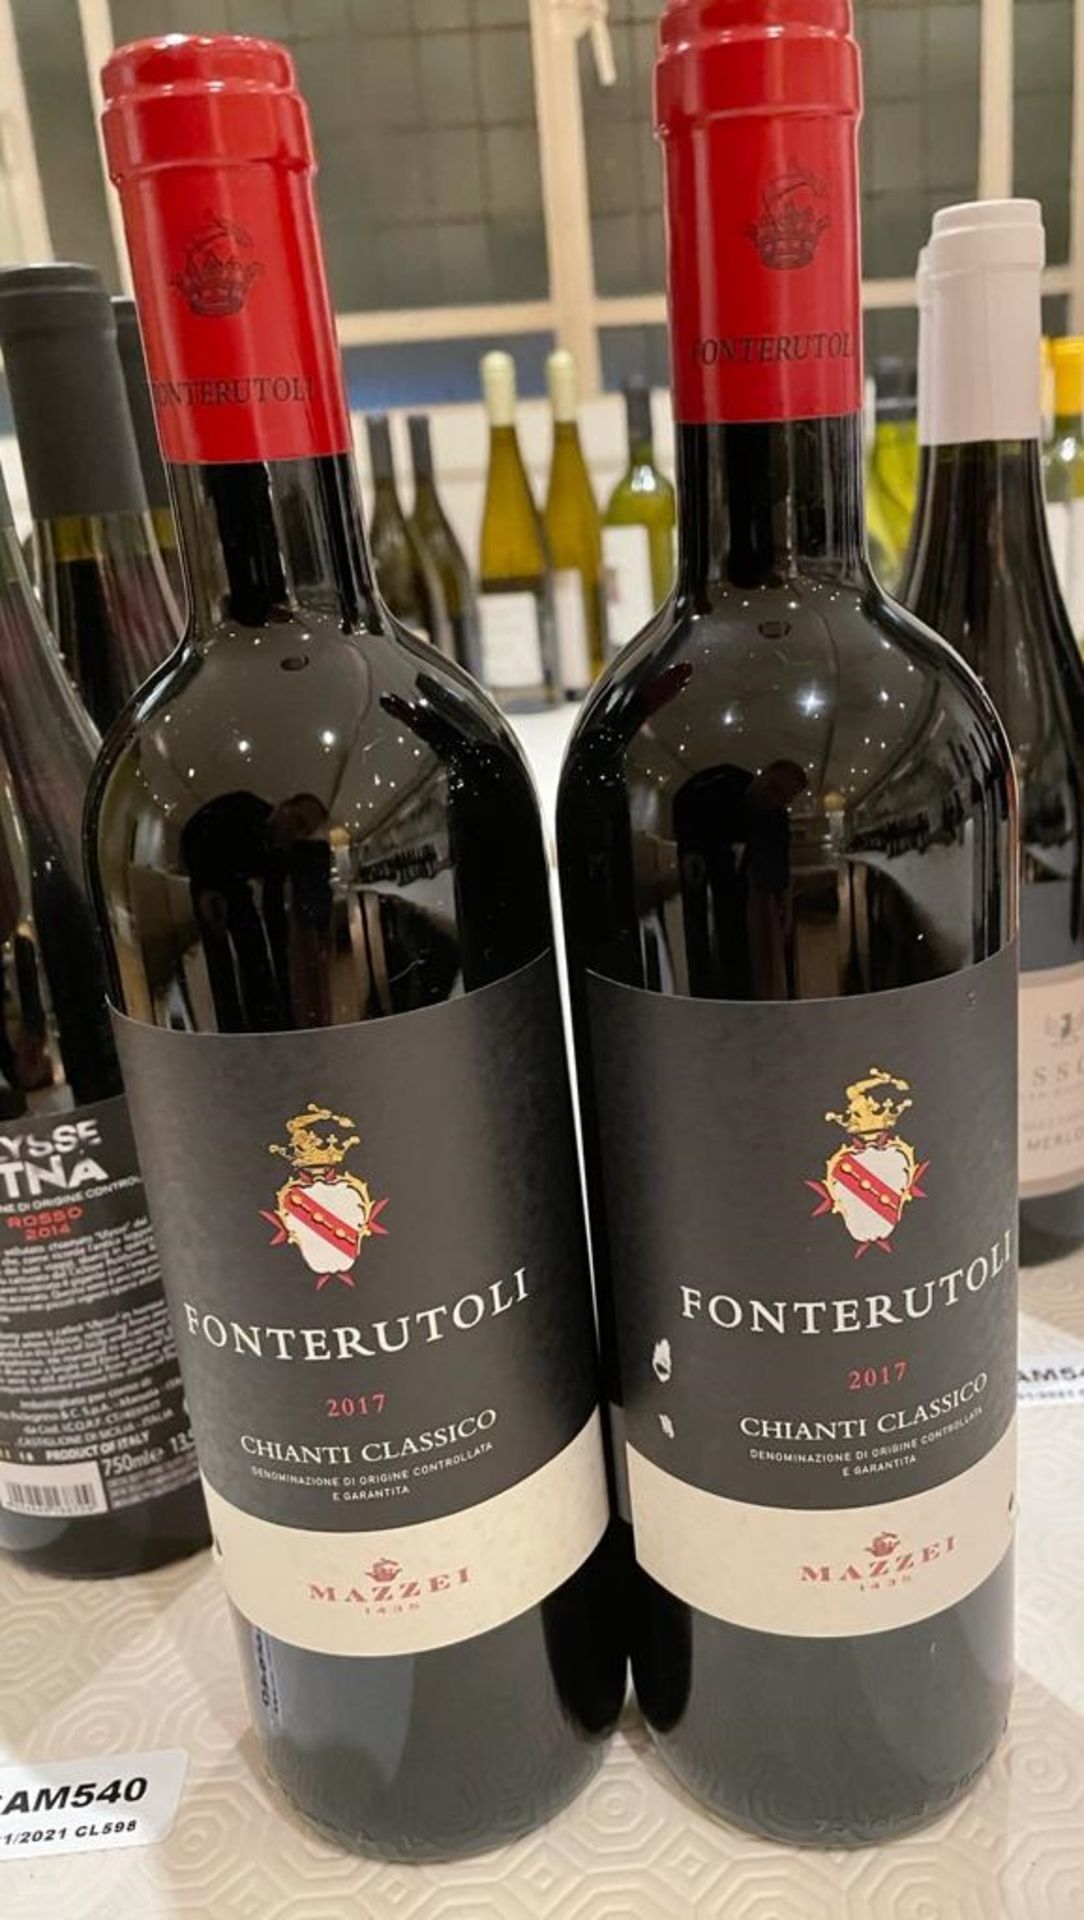 2 x Bottles Of FONTERUTOLI CHIANTI - 2017 - 75cl - New/Unopened Restaurant Stock - Ref: CAM541